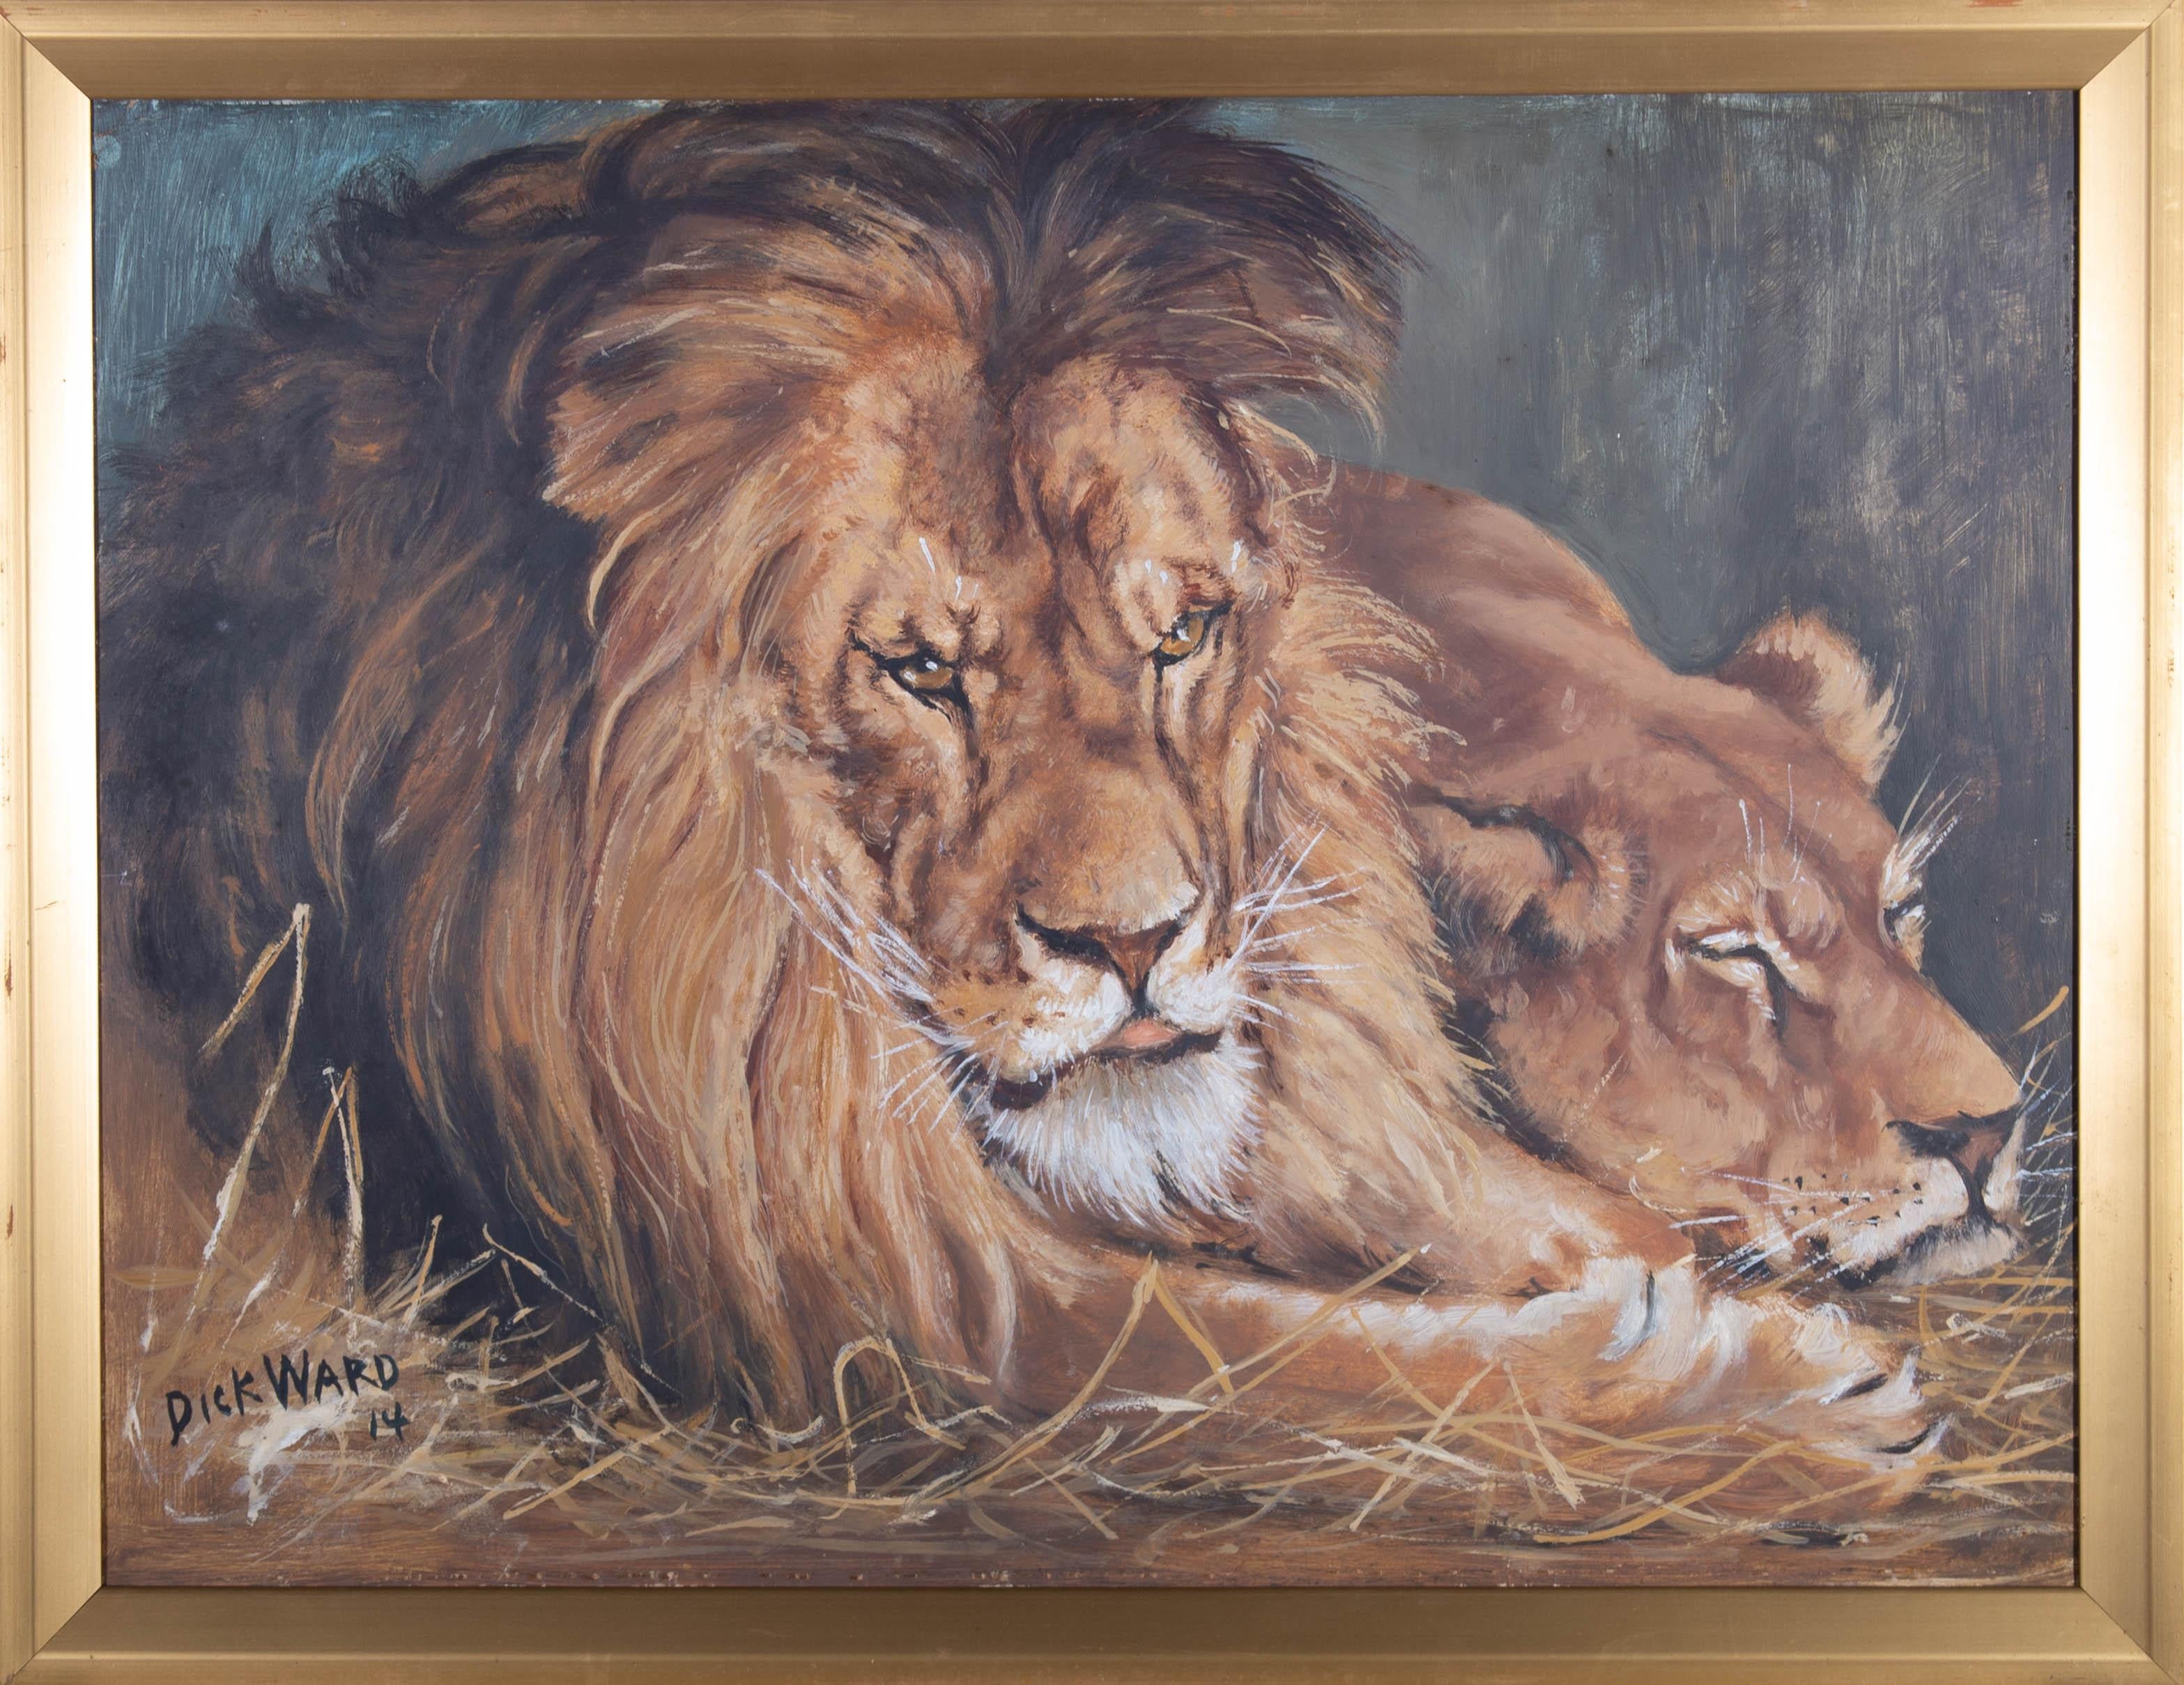 Dick Ward after GÃ©za Vastagh Animal Painting - Dick Ward after Géza Vastagh (1866-1919) - 2014 Oil, Repose